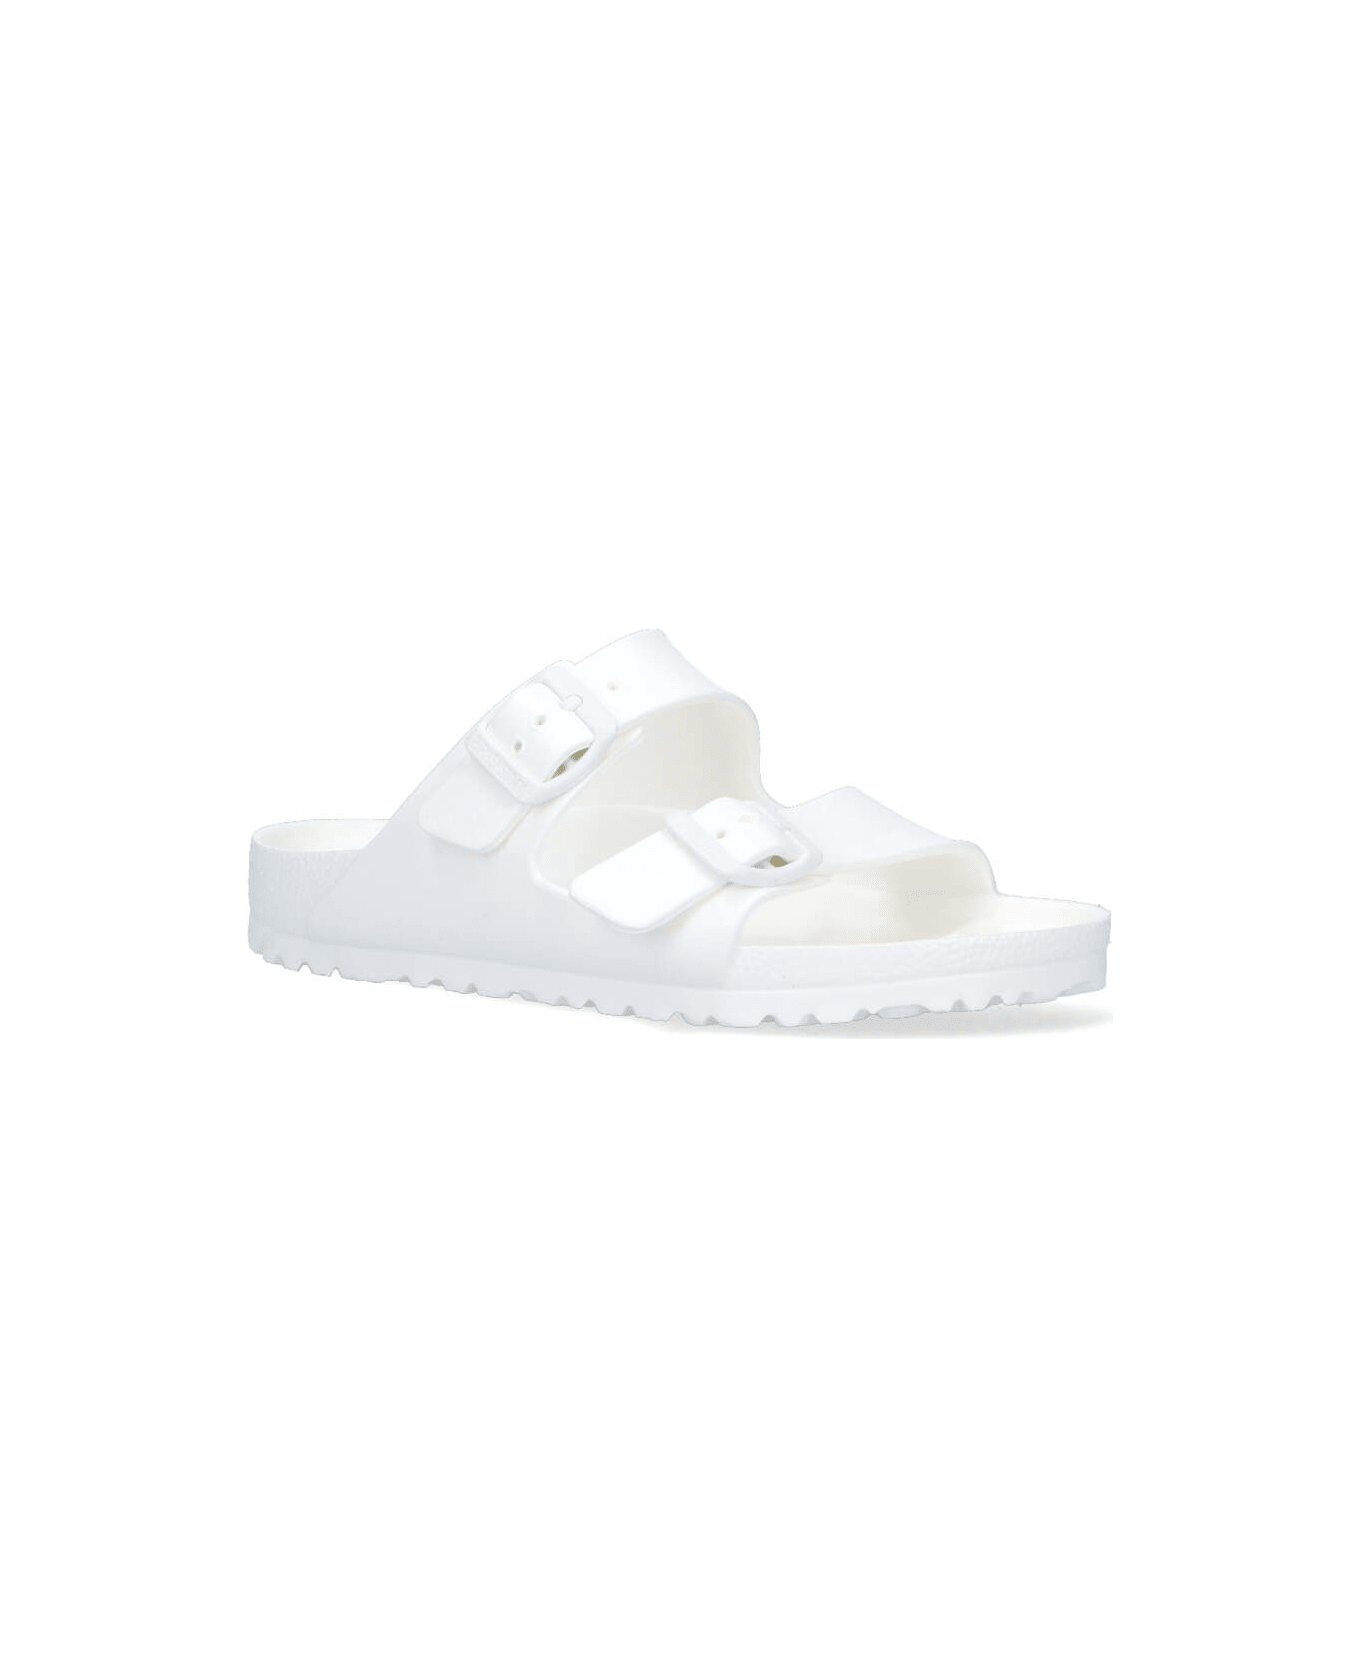 Birkenstock 'arizona' Sandals - White サンダル